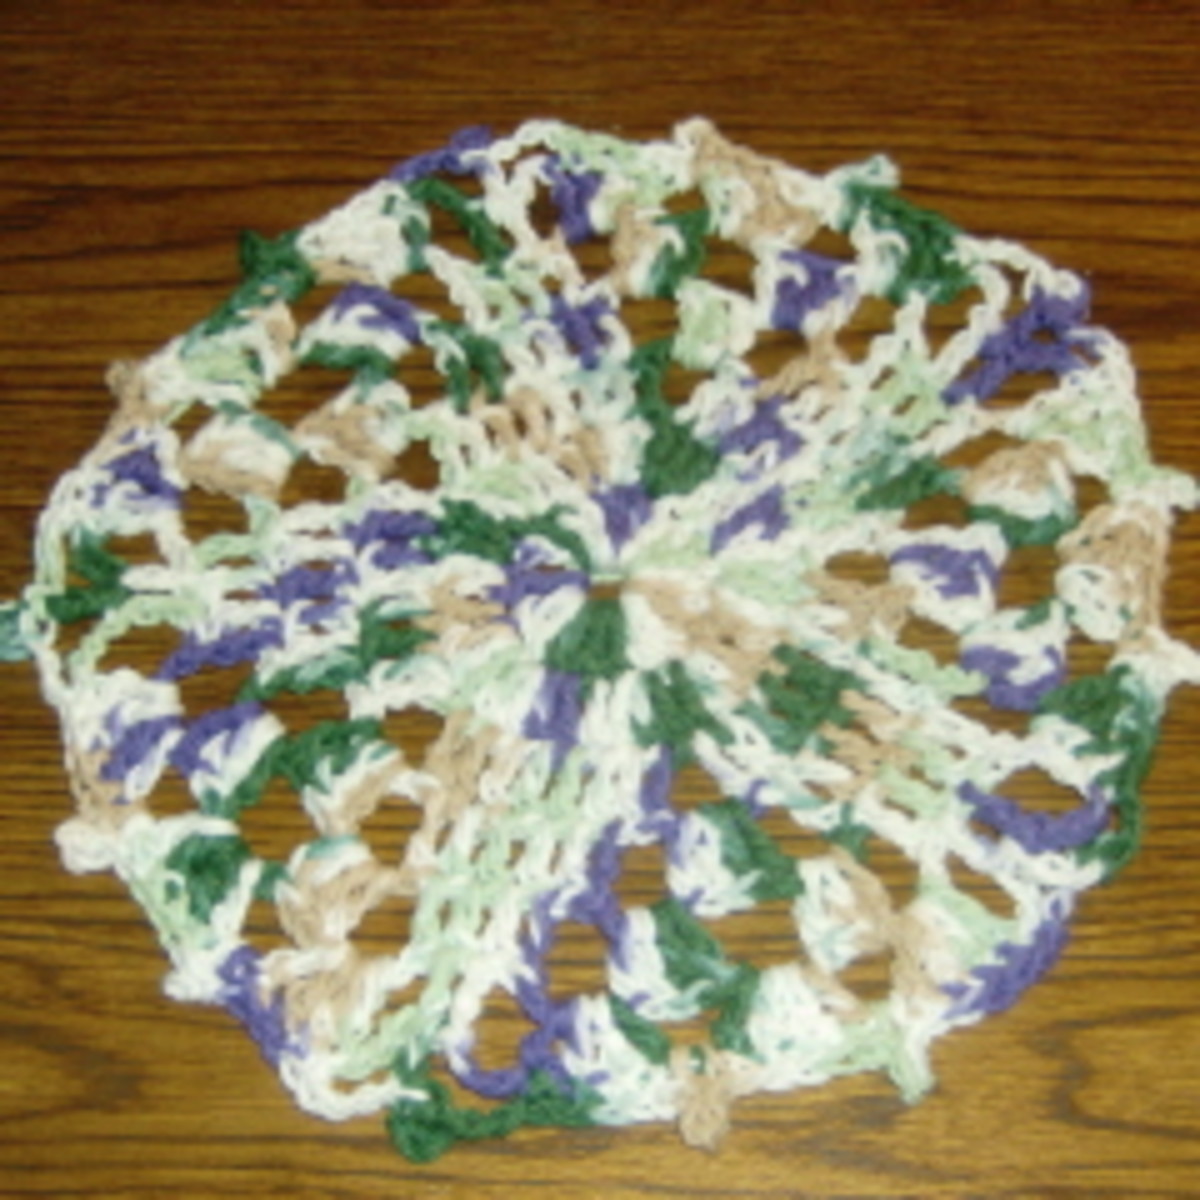 Crochet Star Dishcloth